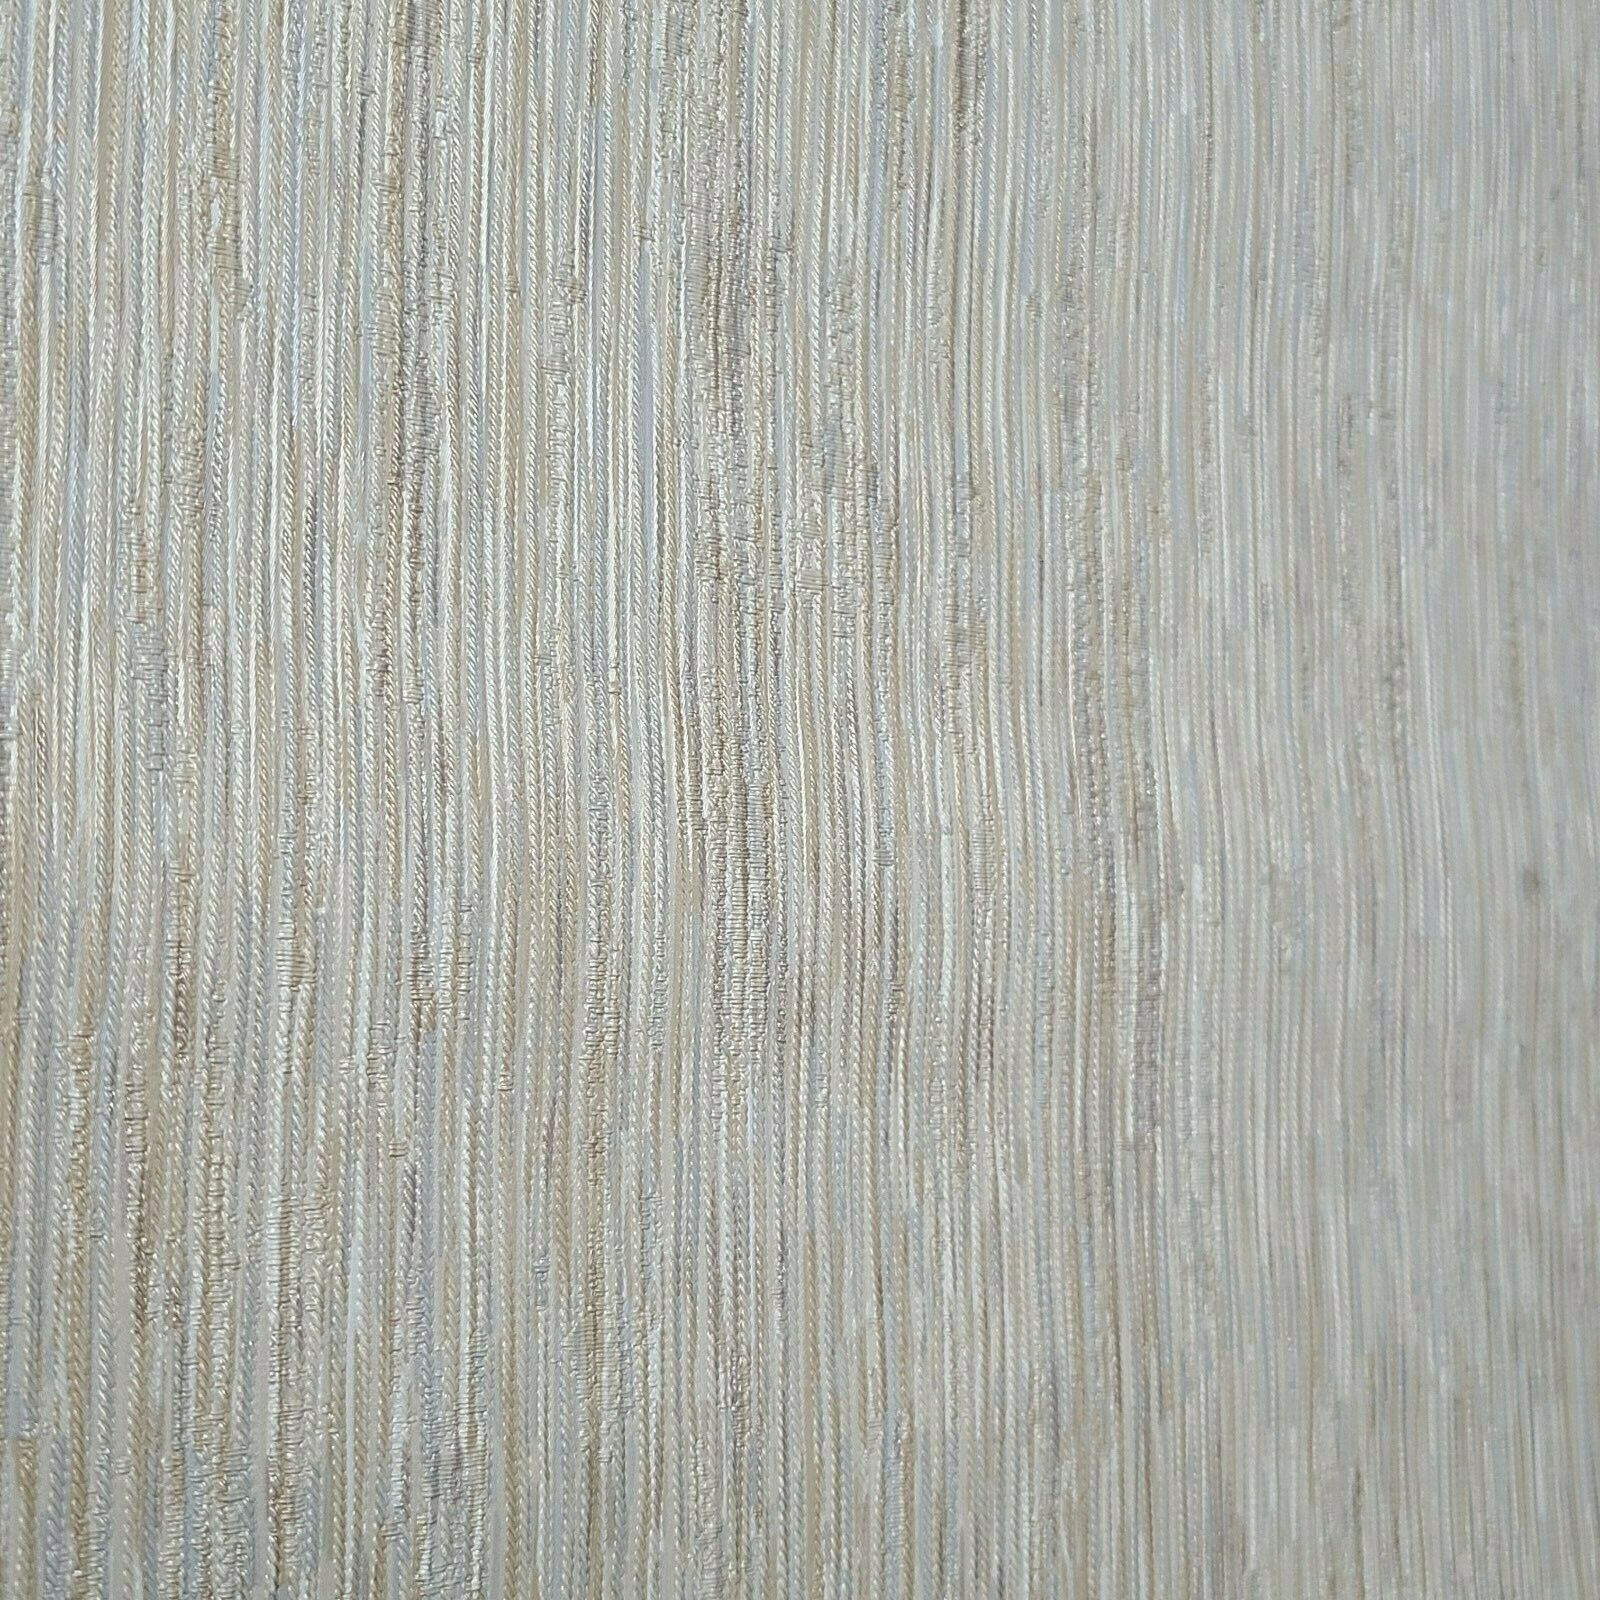 Z21818 Beige tan gray cream stria lines faux fabric texture plain 